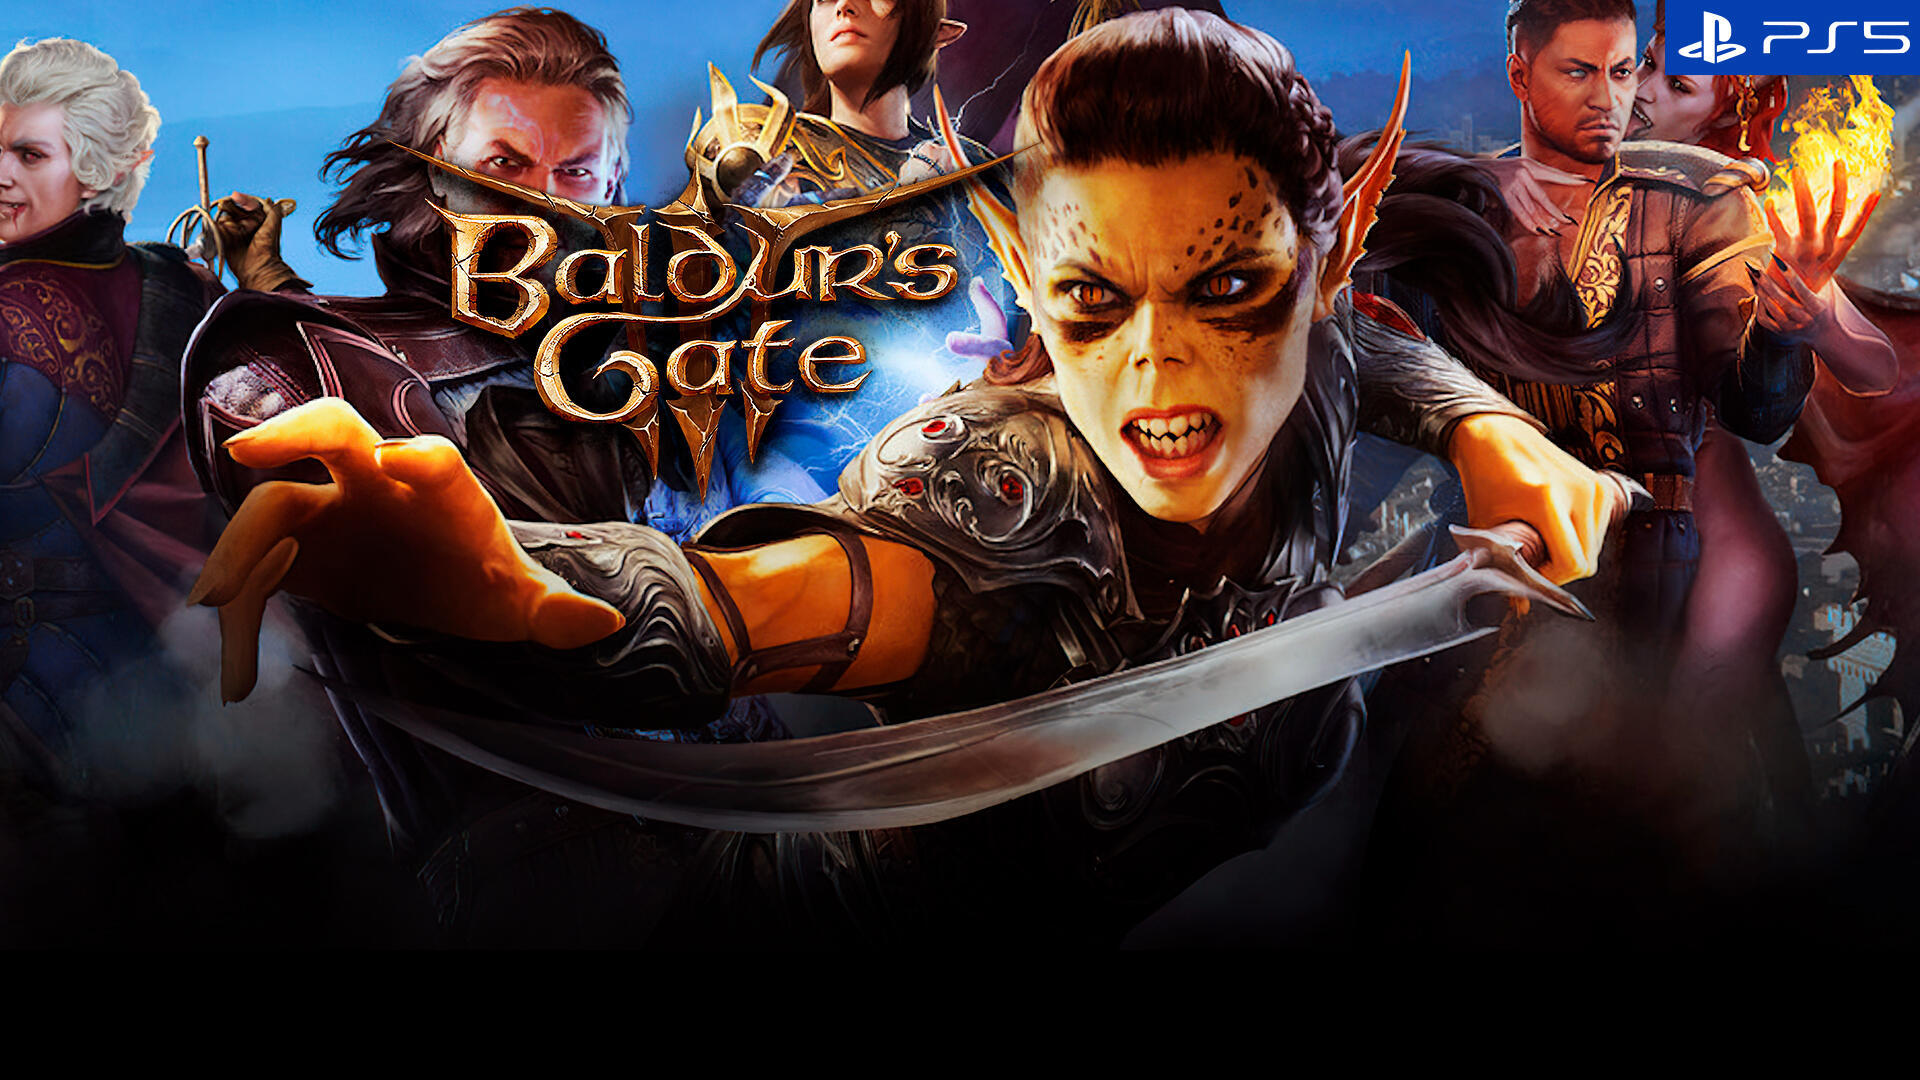 Análisis de Baldur's Gate 3 para PS5